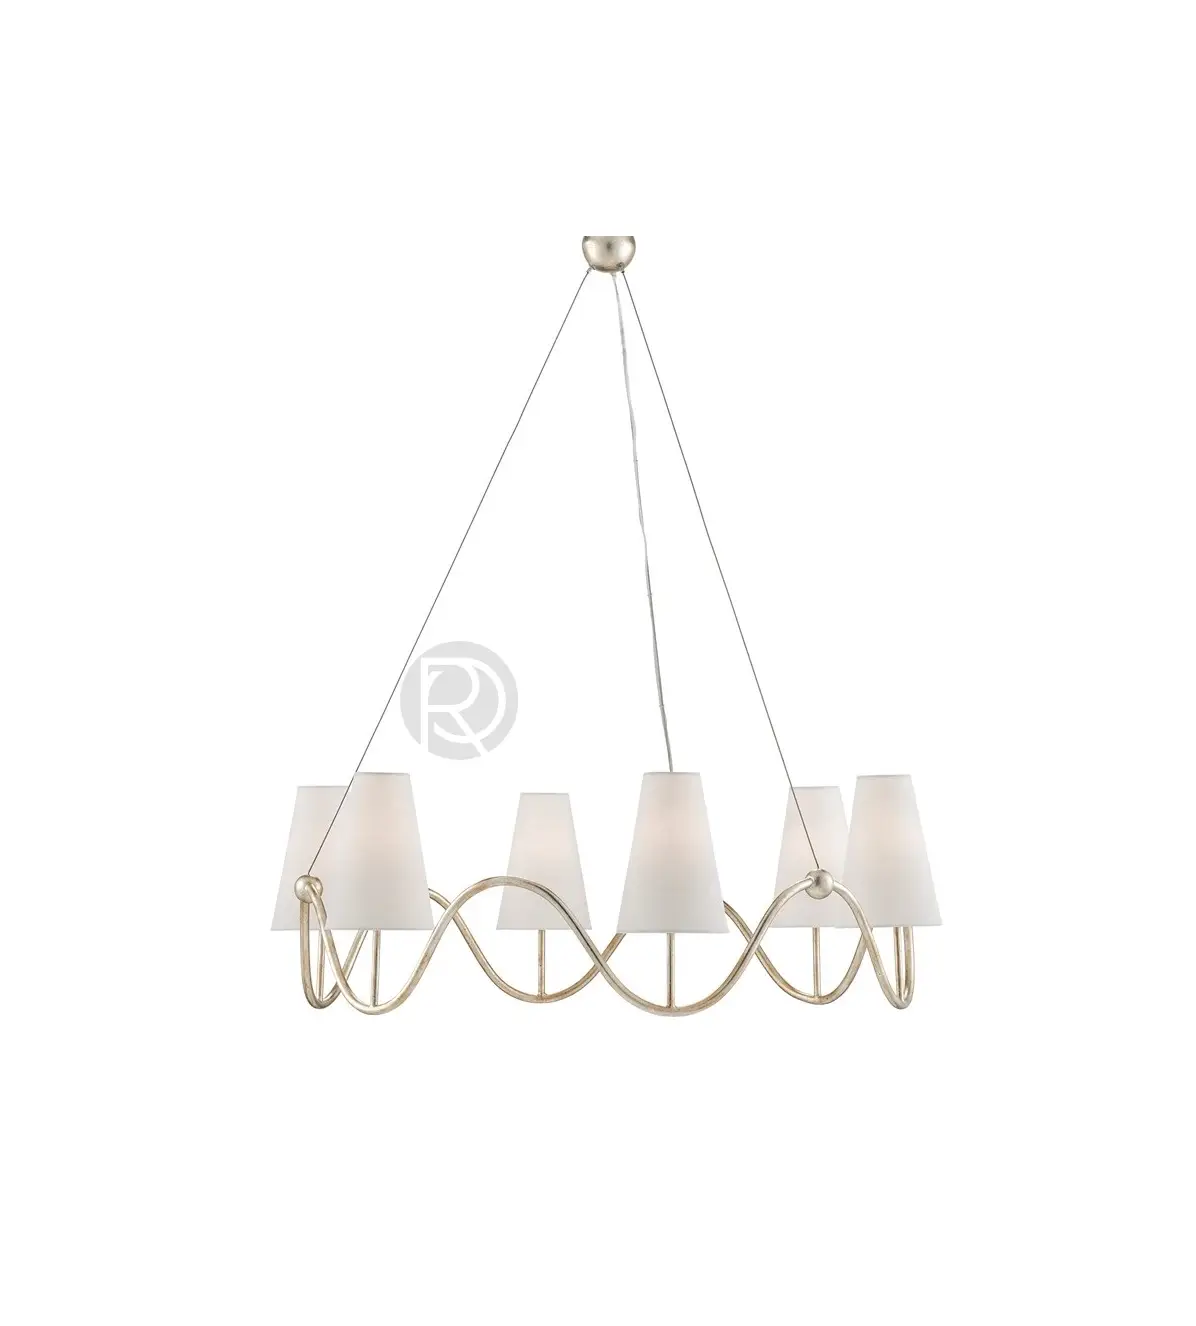 KADIR chandelier by Currey & Company